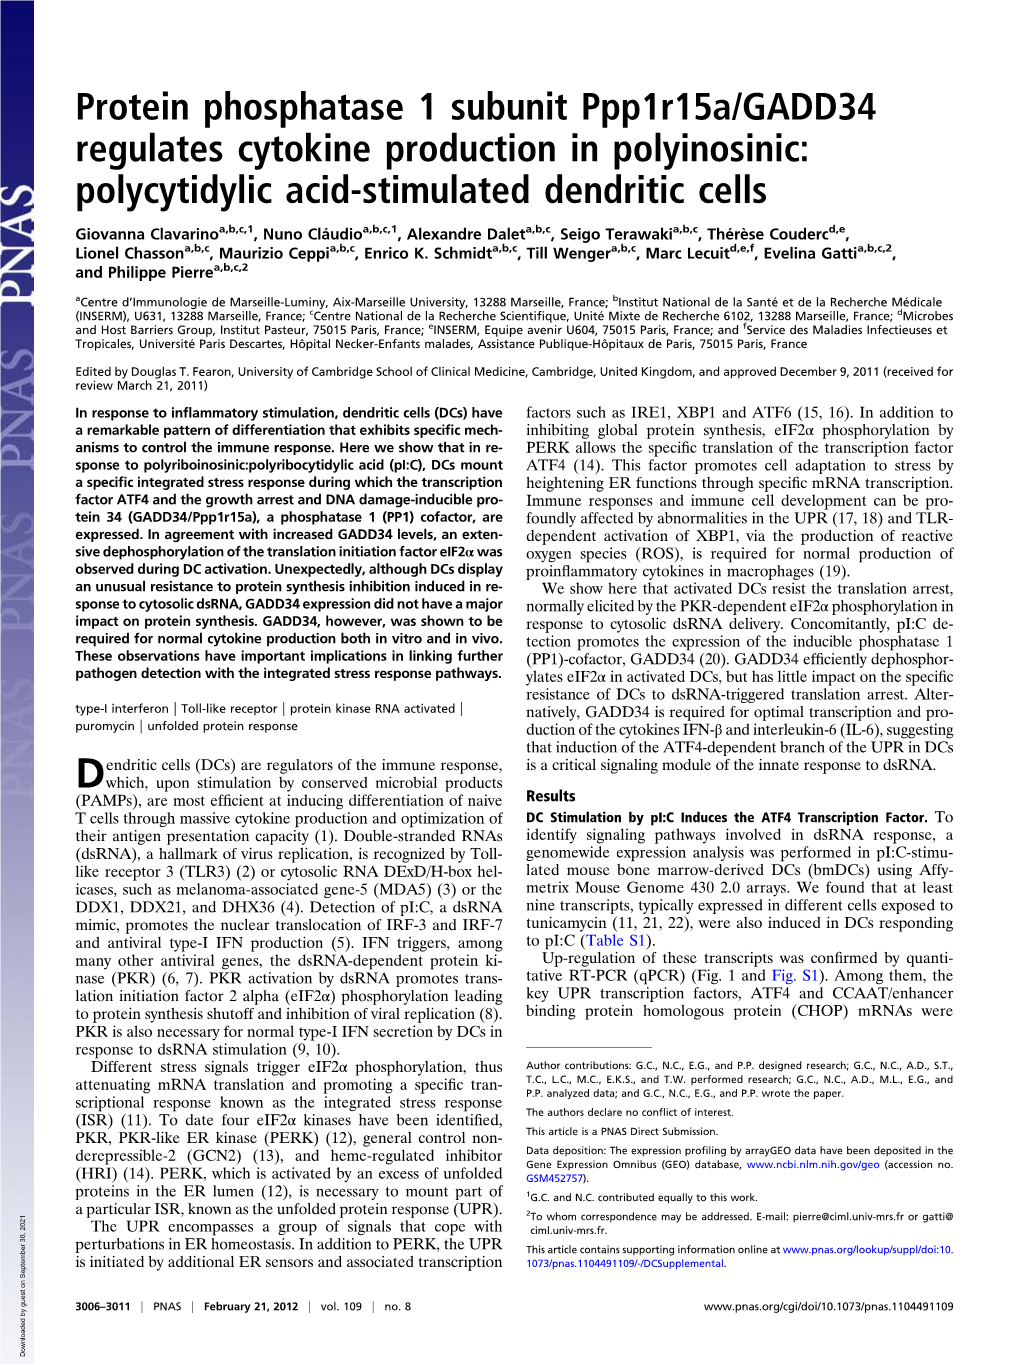 Protein Phosphatase 1 Subunit Ppp1r15a/GADD34 Regulates Cytokine Production in Polyinosinic: Polycytidylic Acid-Stimulated Dendritic Cells